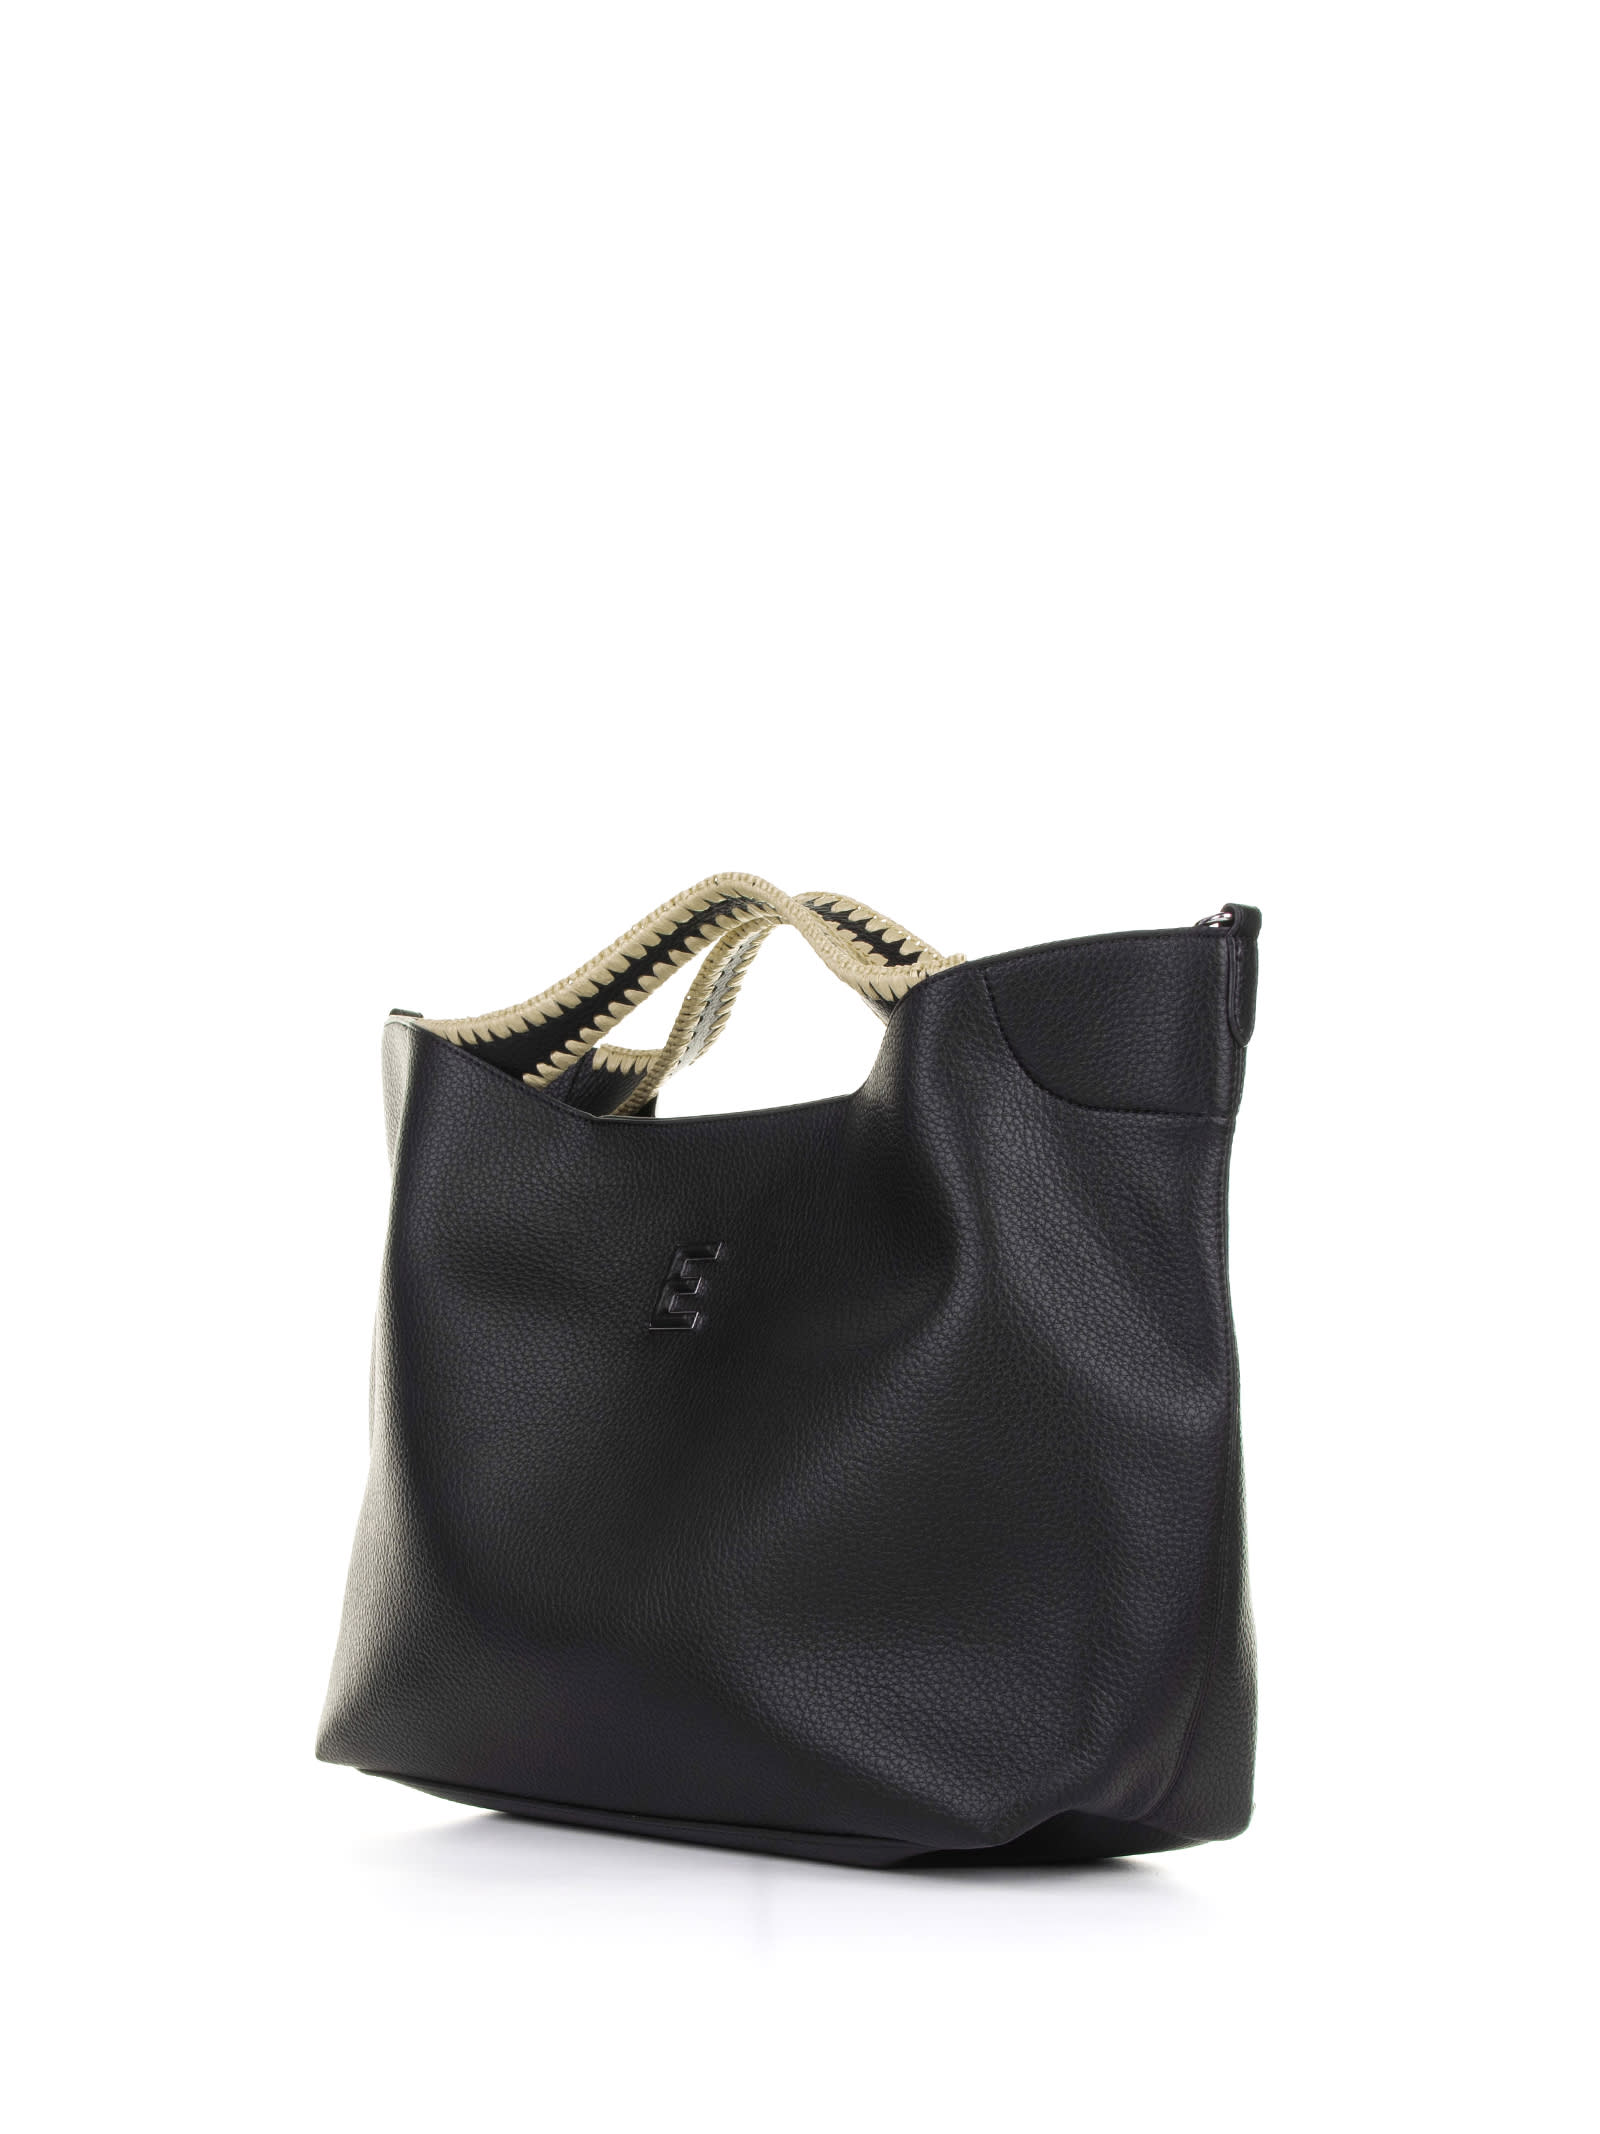 Shop Ermanno Scervino Rachele Large Black Leather Handbag In Nero